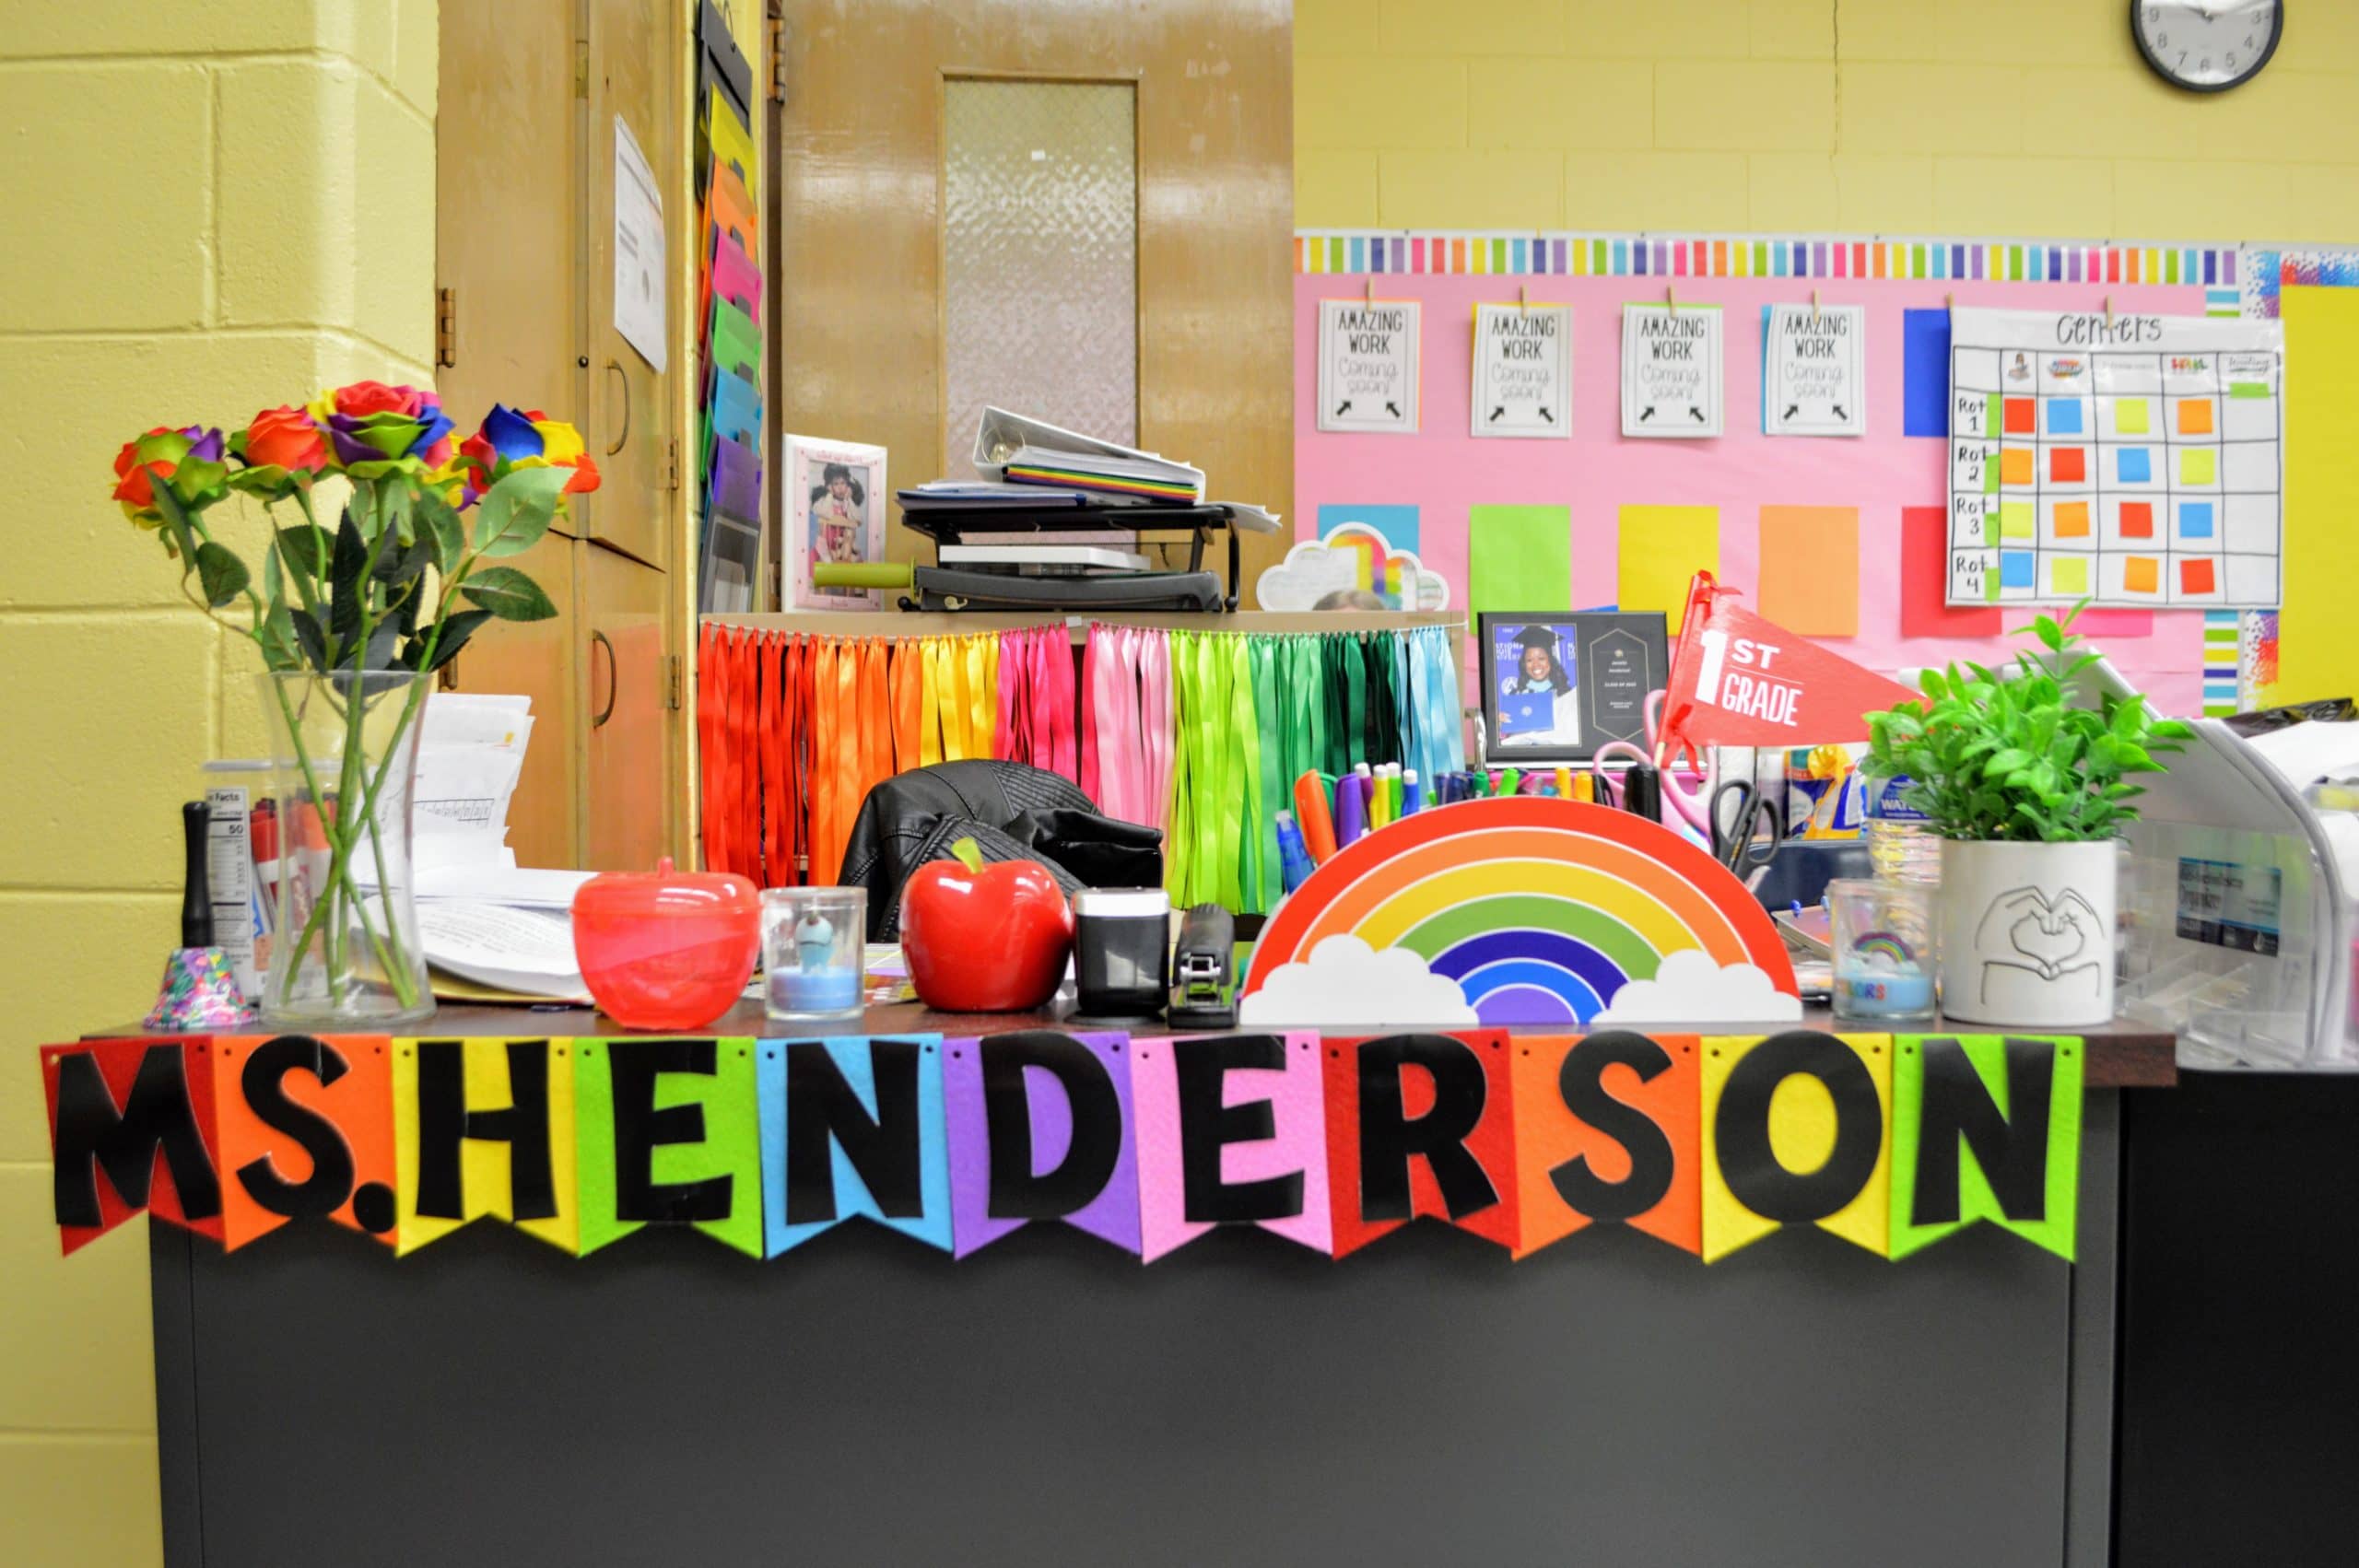 Image of Ms. Henderson's desk